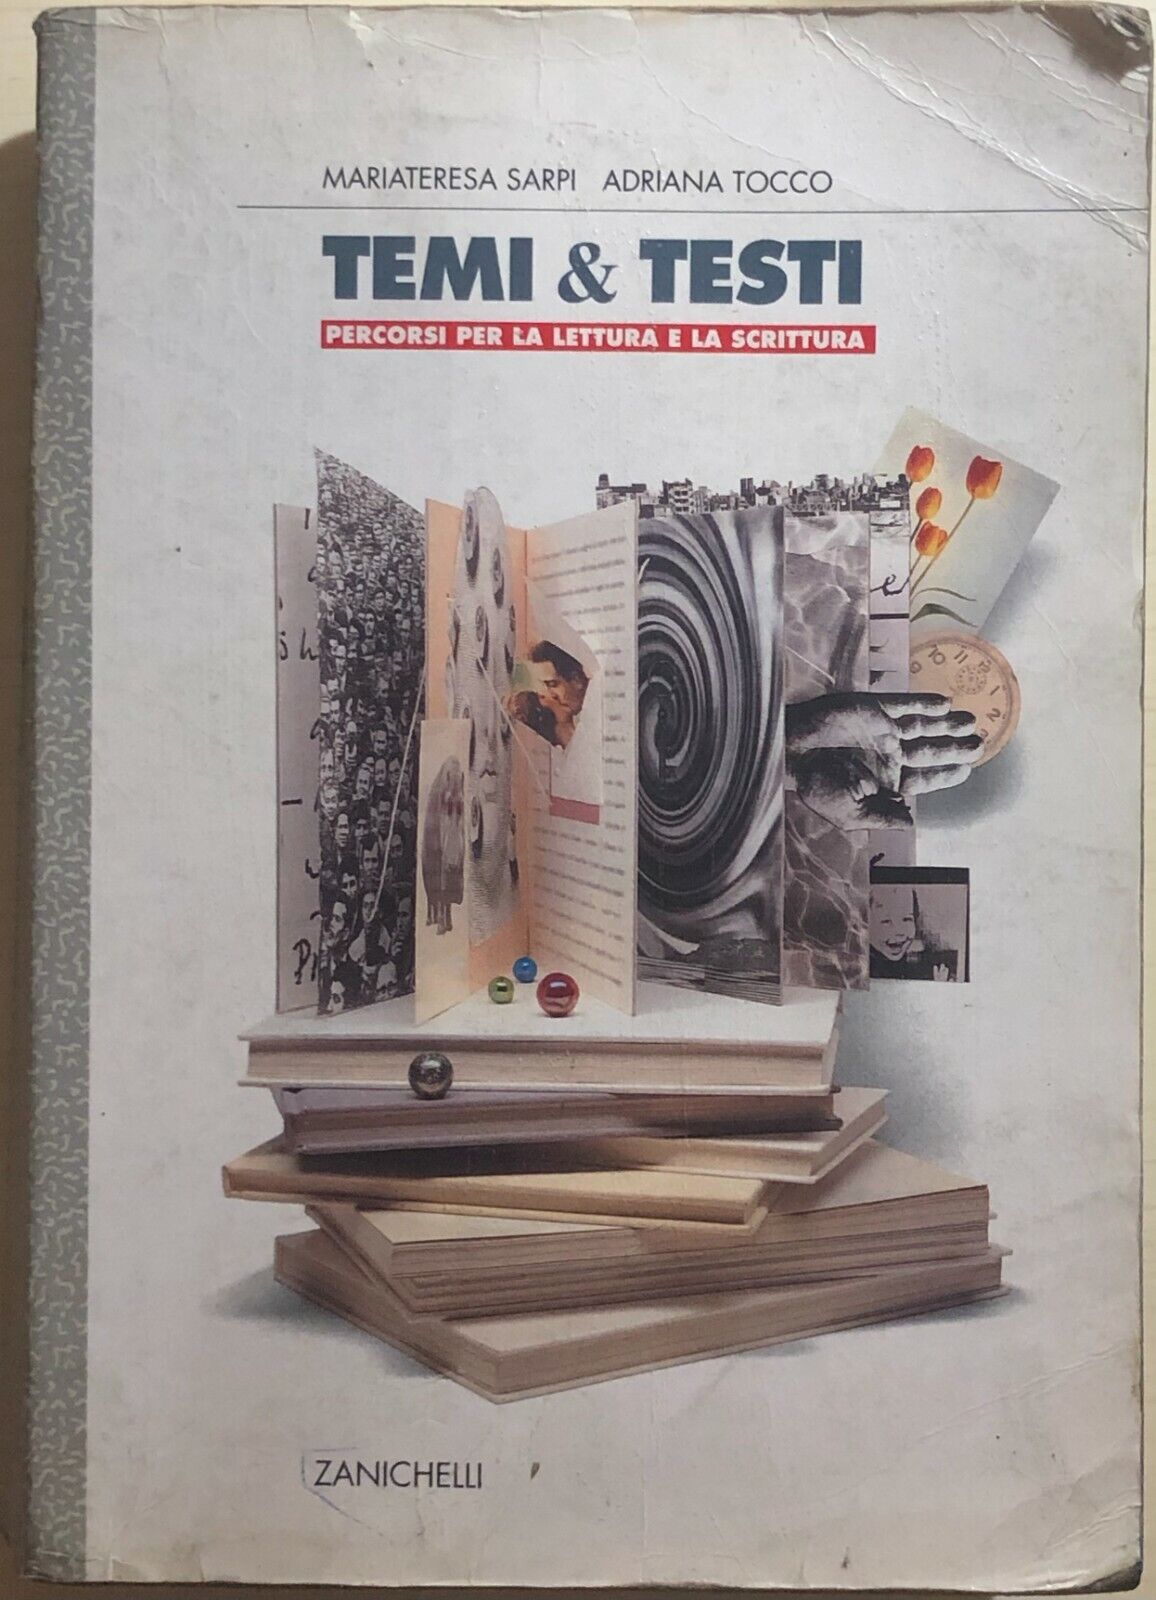 Temi & testi di Sarpi-Tocco, 1995, Zanichelli